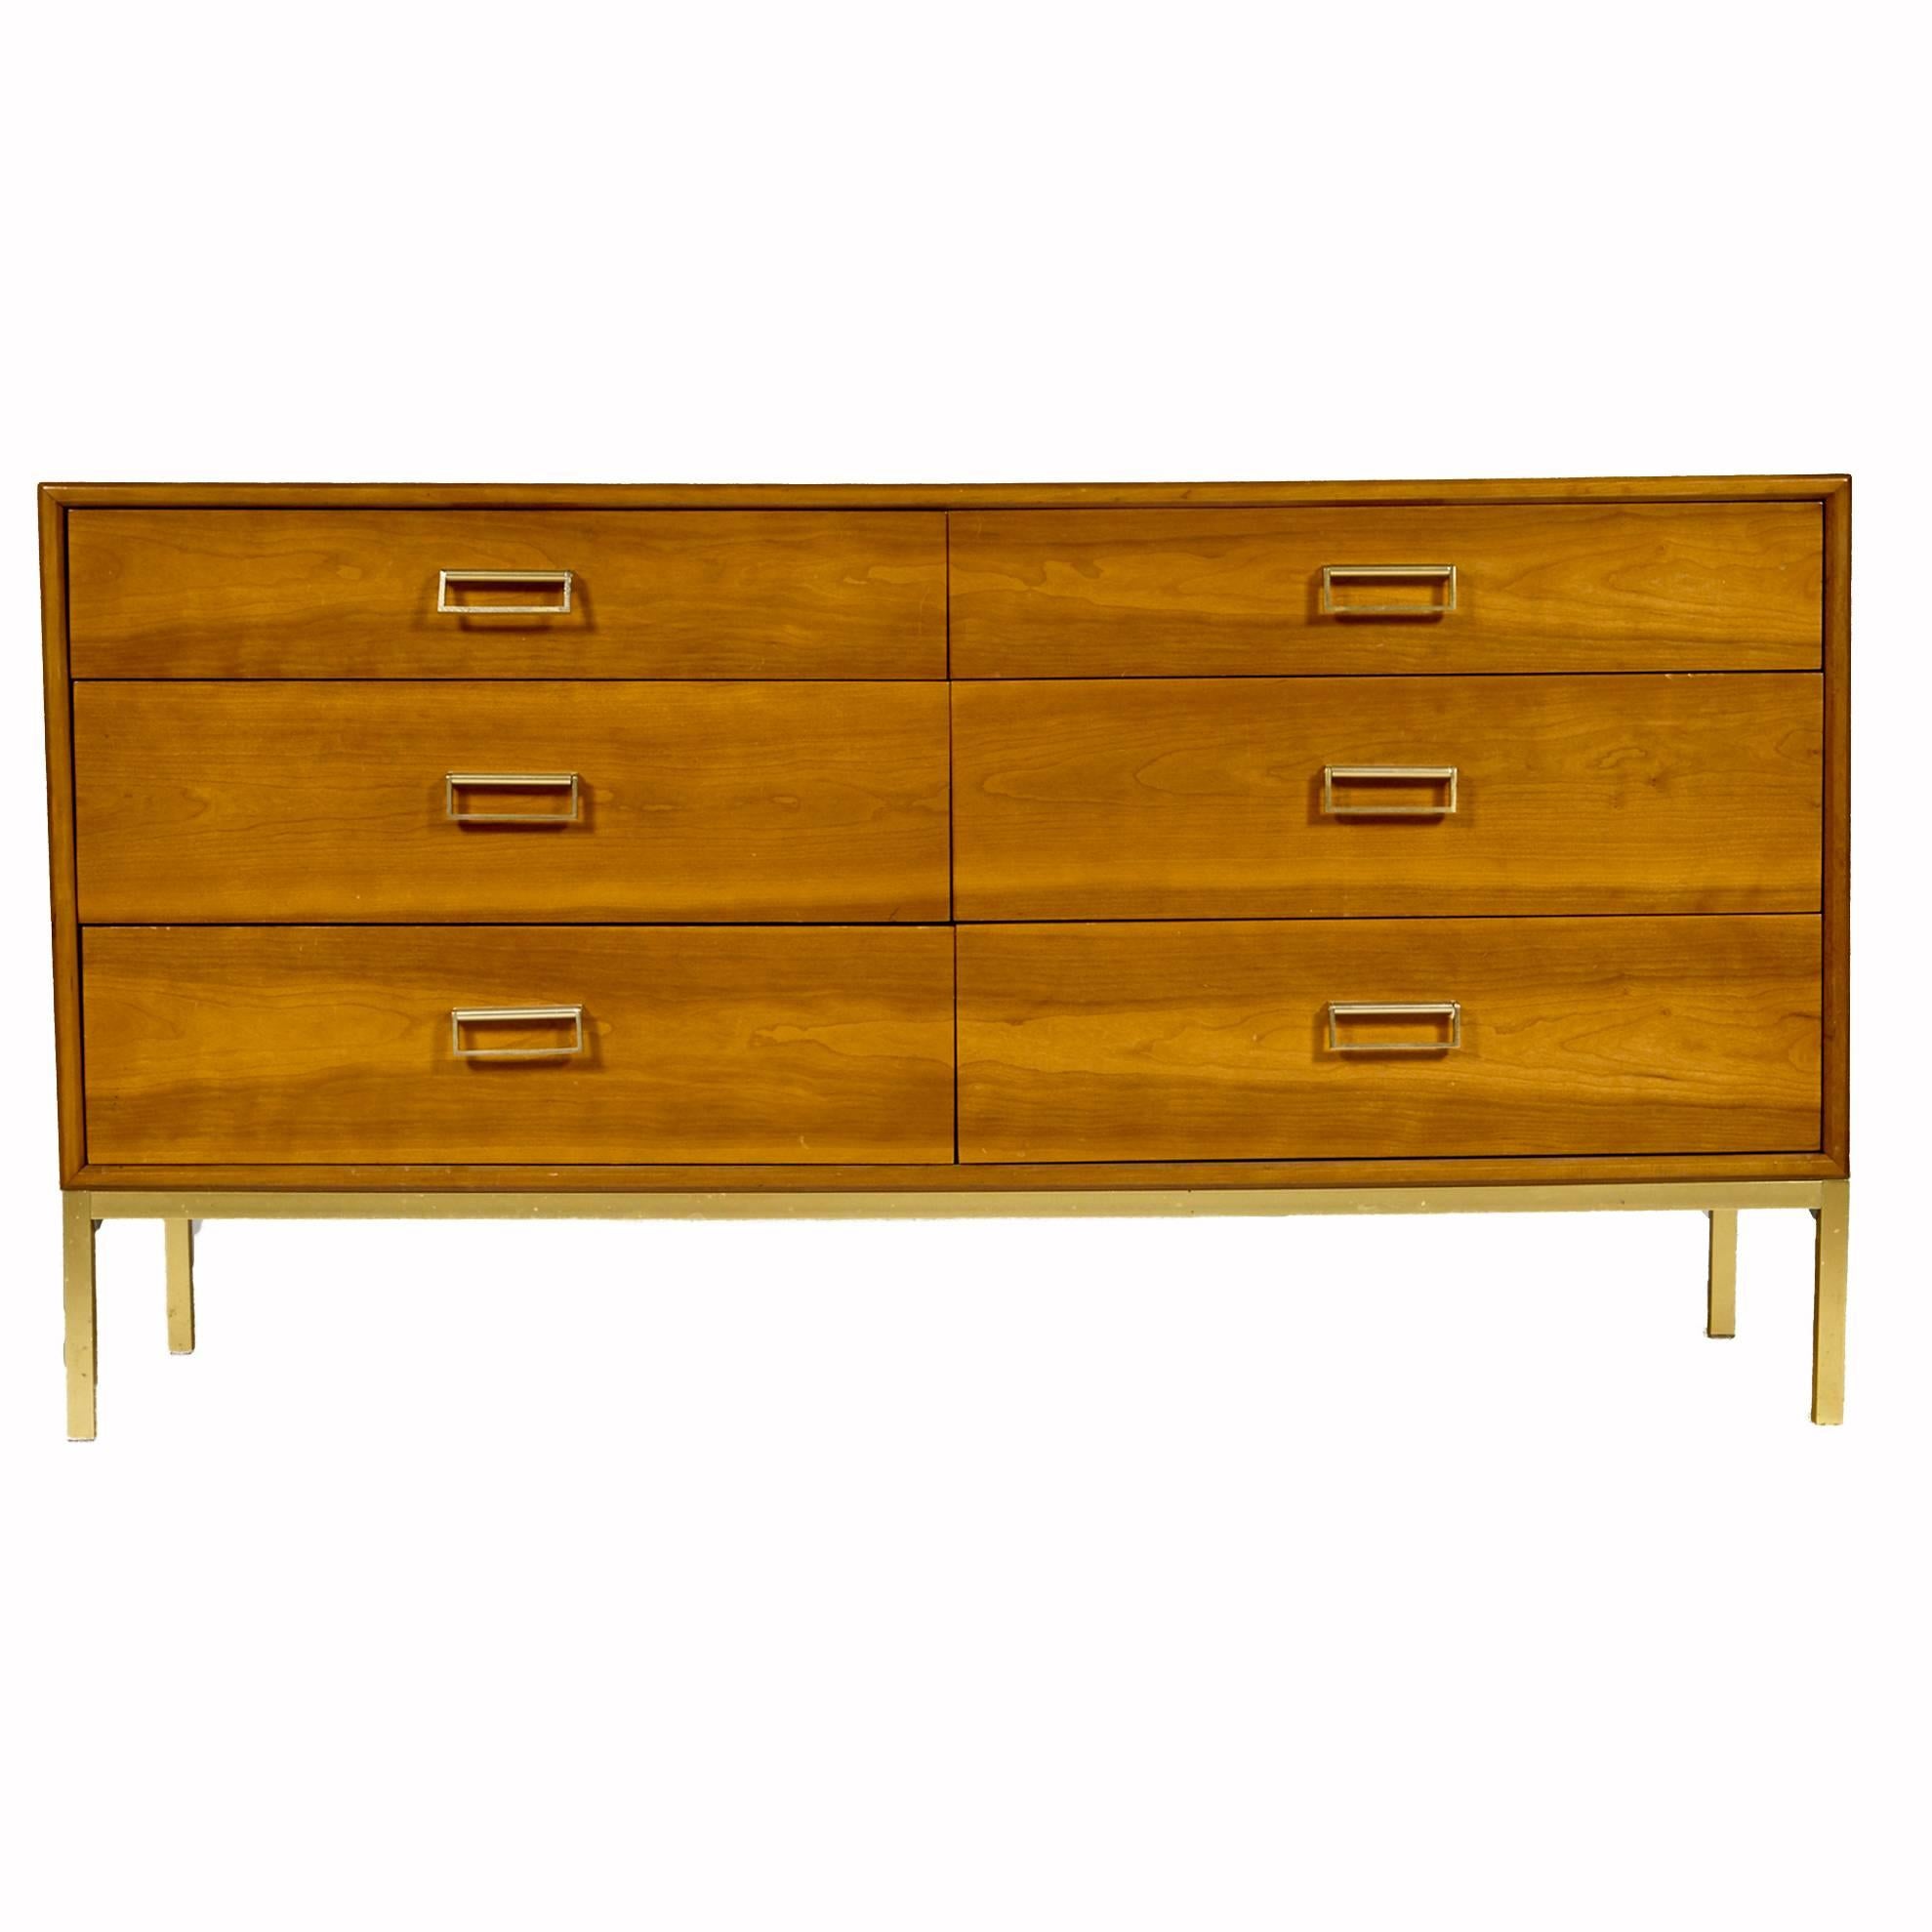 Mid-Century Modern six-drawer dresser in the 